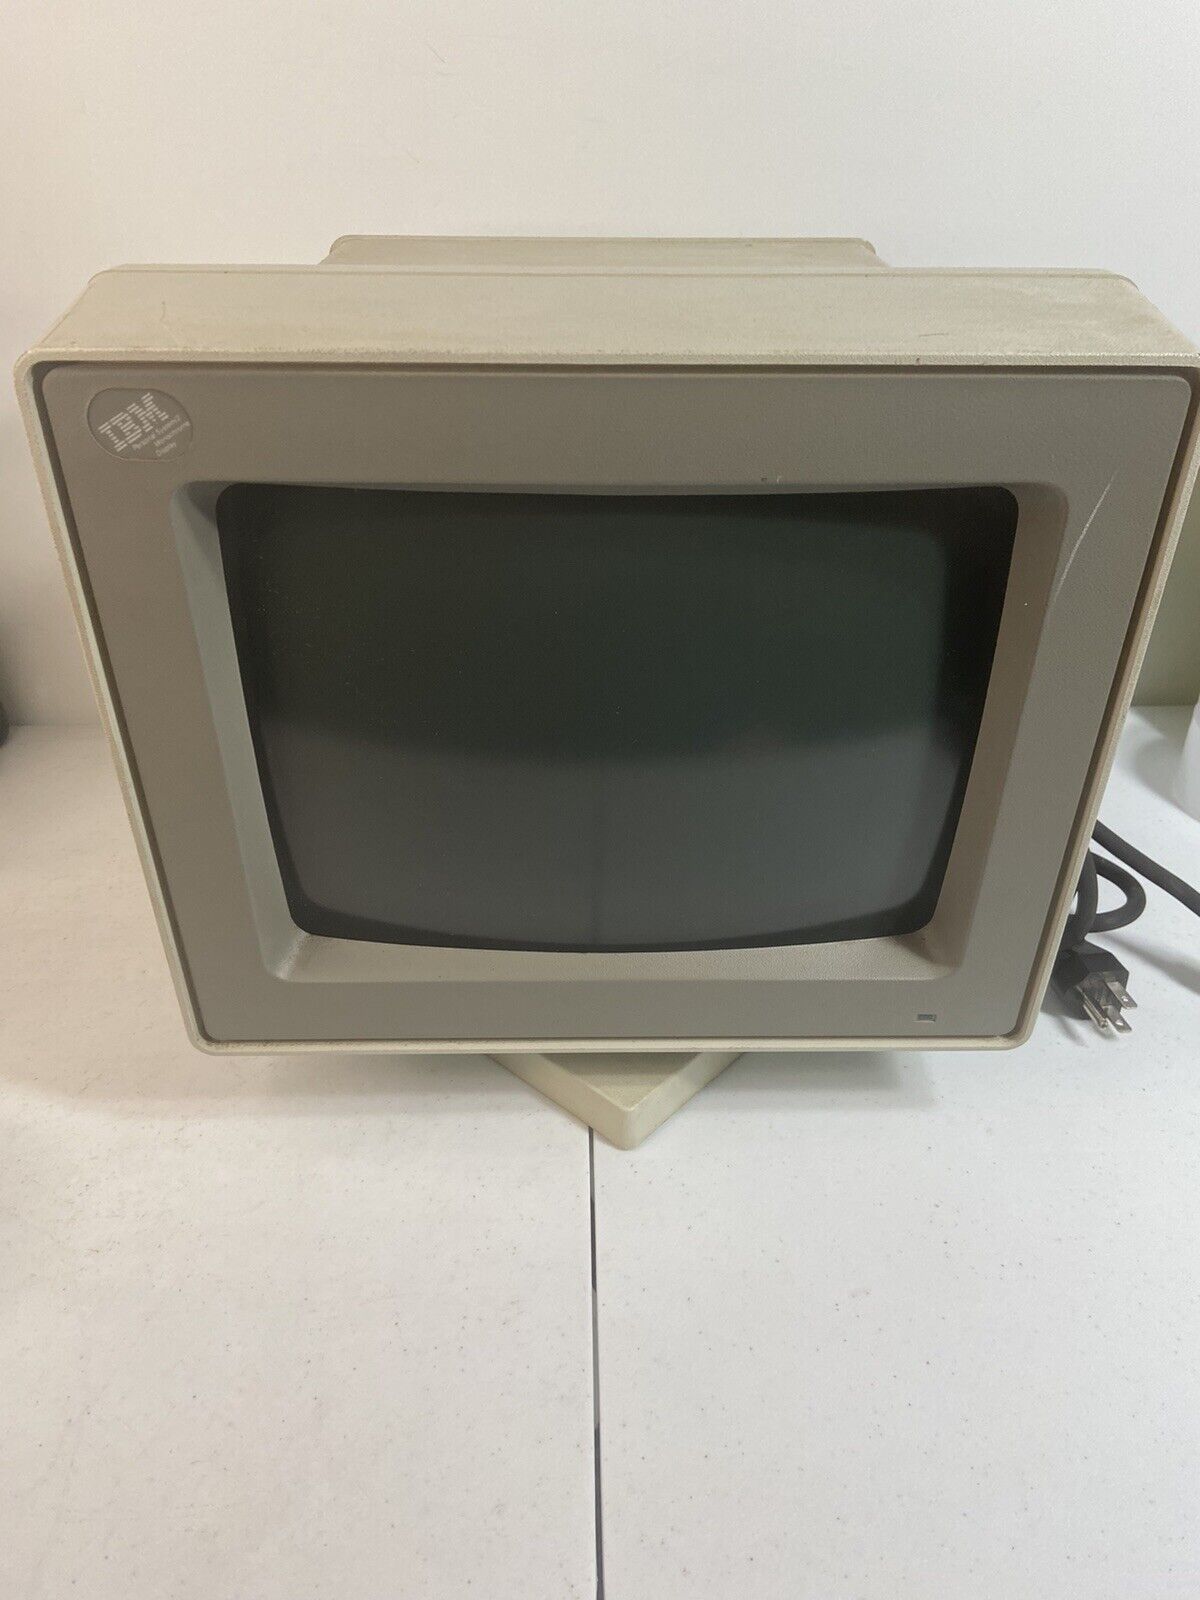 IBM 8503 8503001 Greyscale Monochrome Monitor Vintage Rare POWERS ON